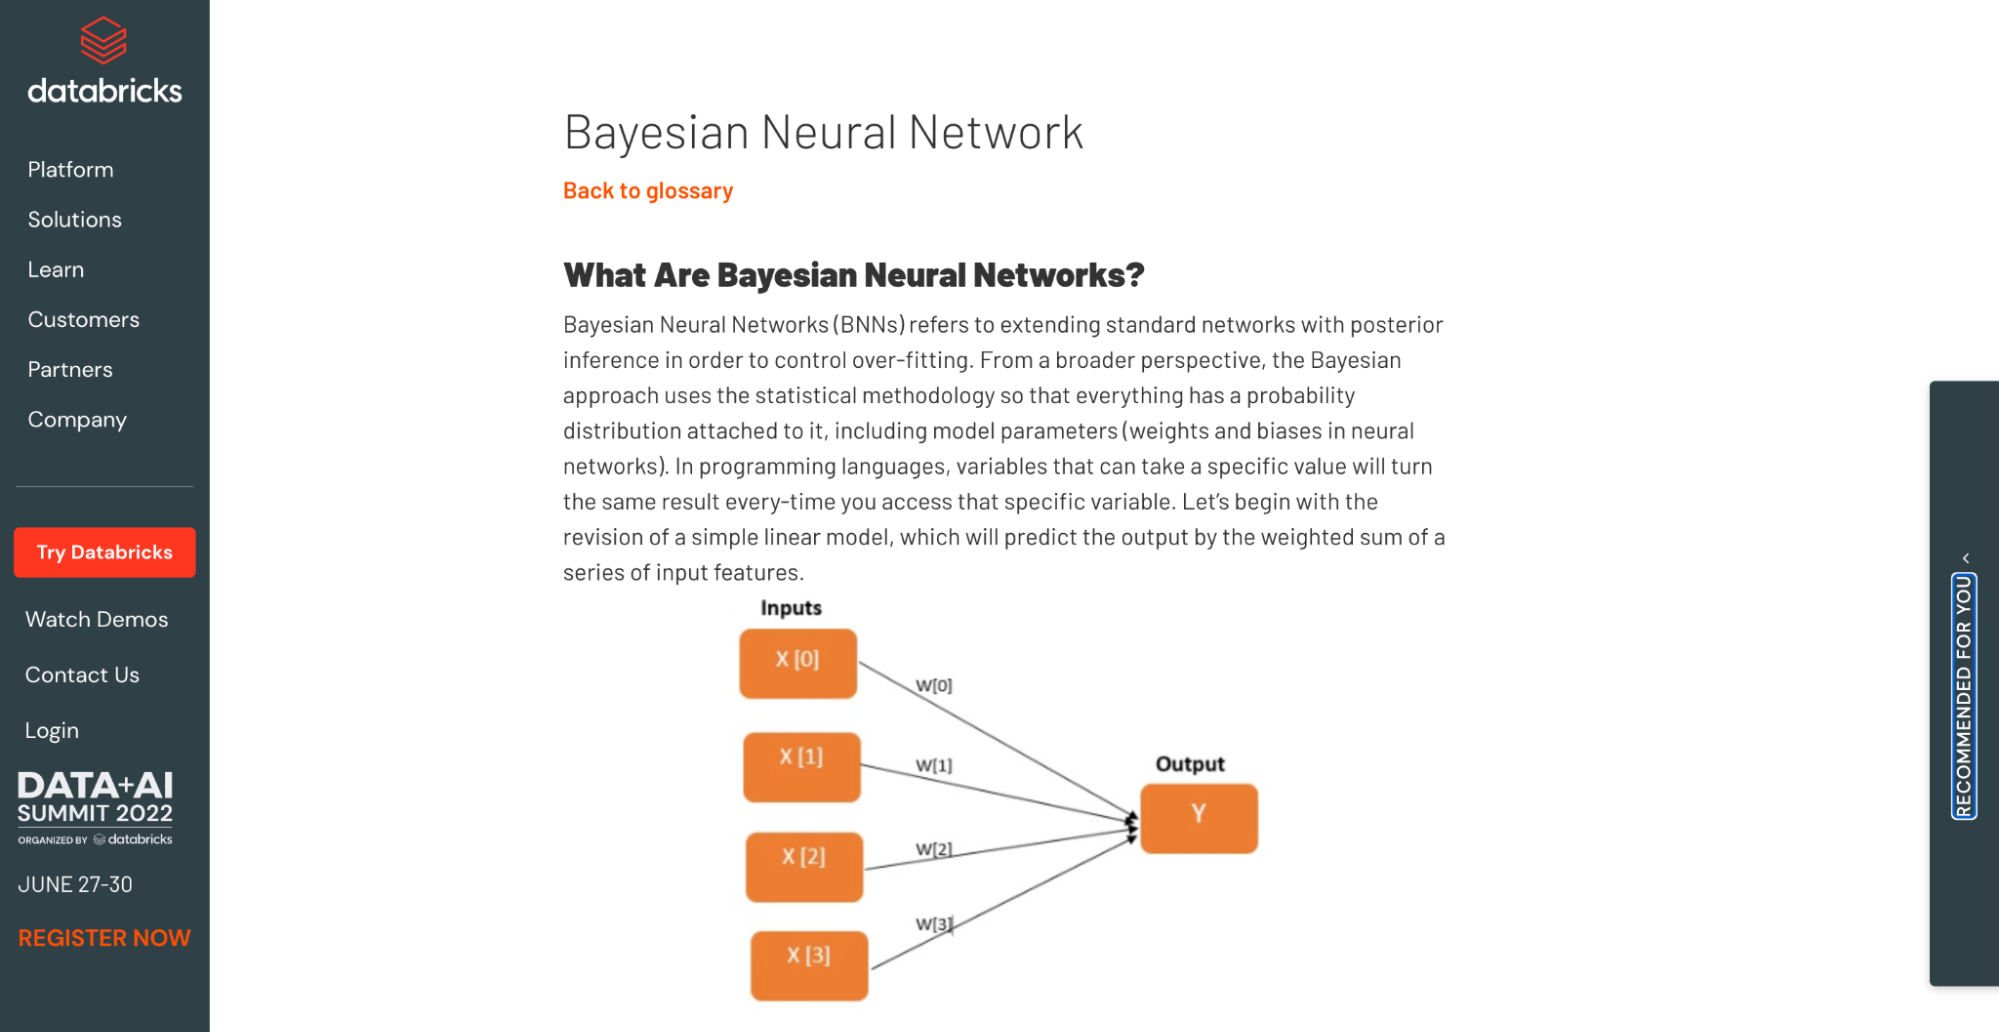 Databricks glossary entry for Bayesian Neural Network